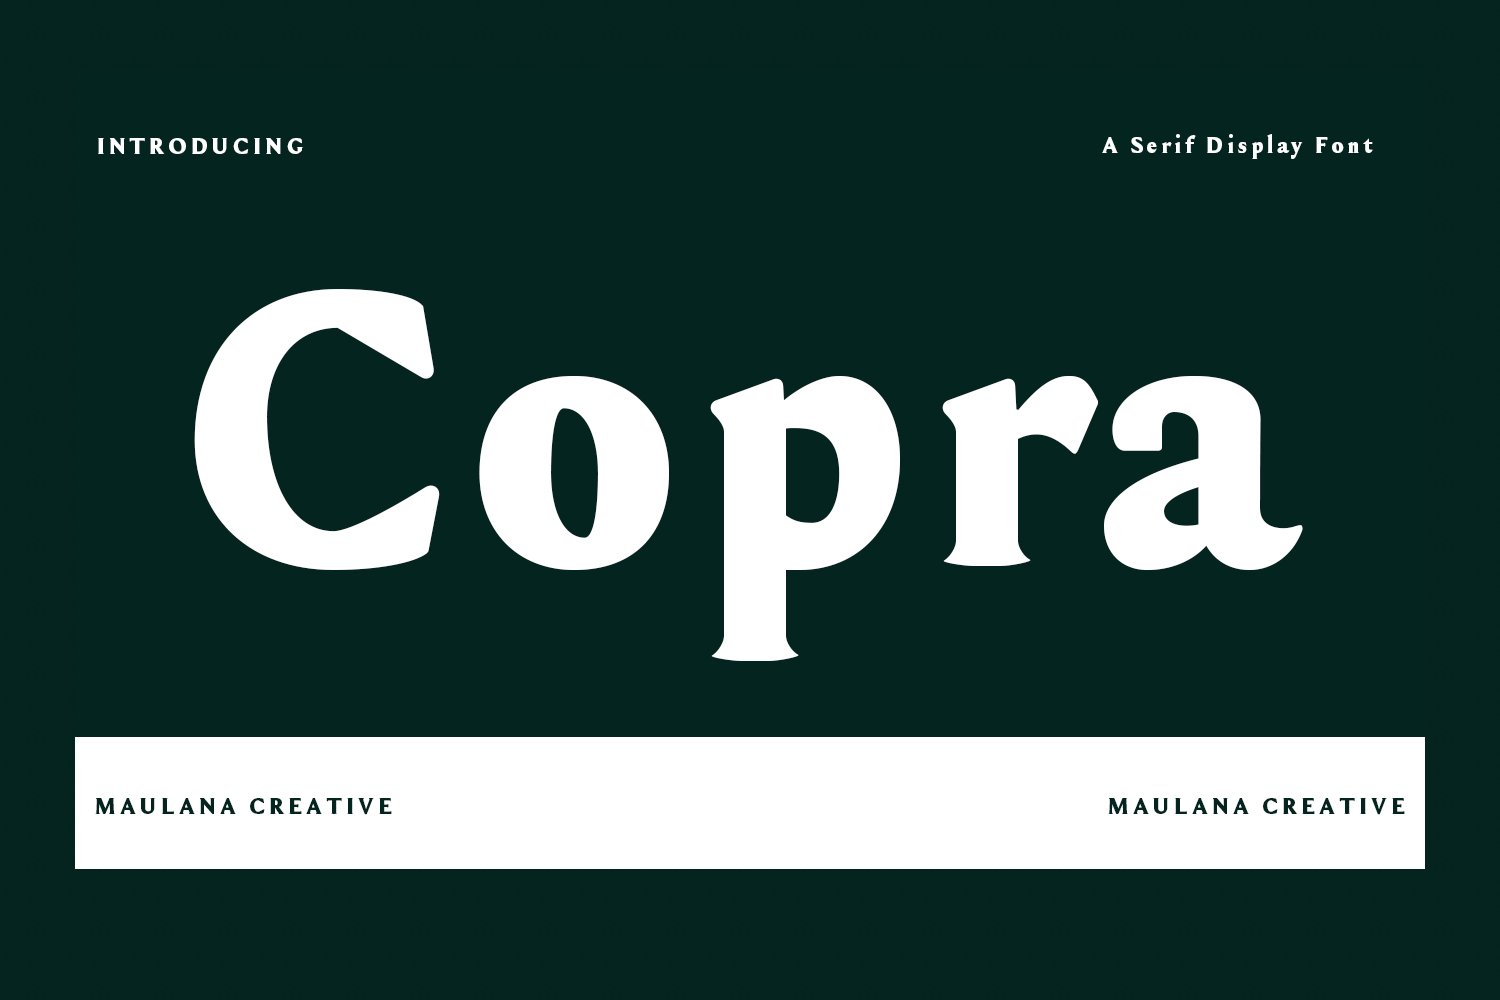 Copra Serif Display Fontcover image.